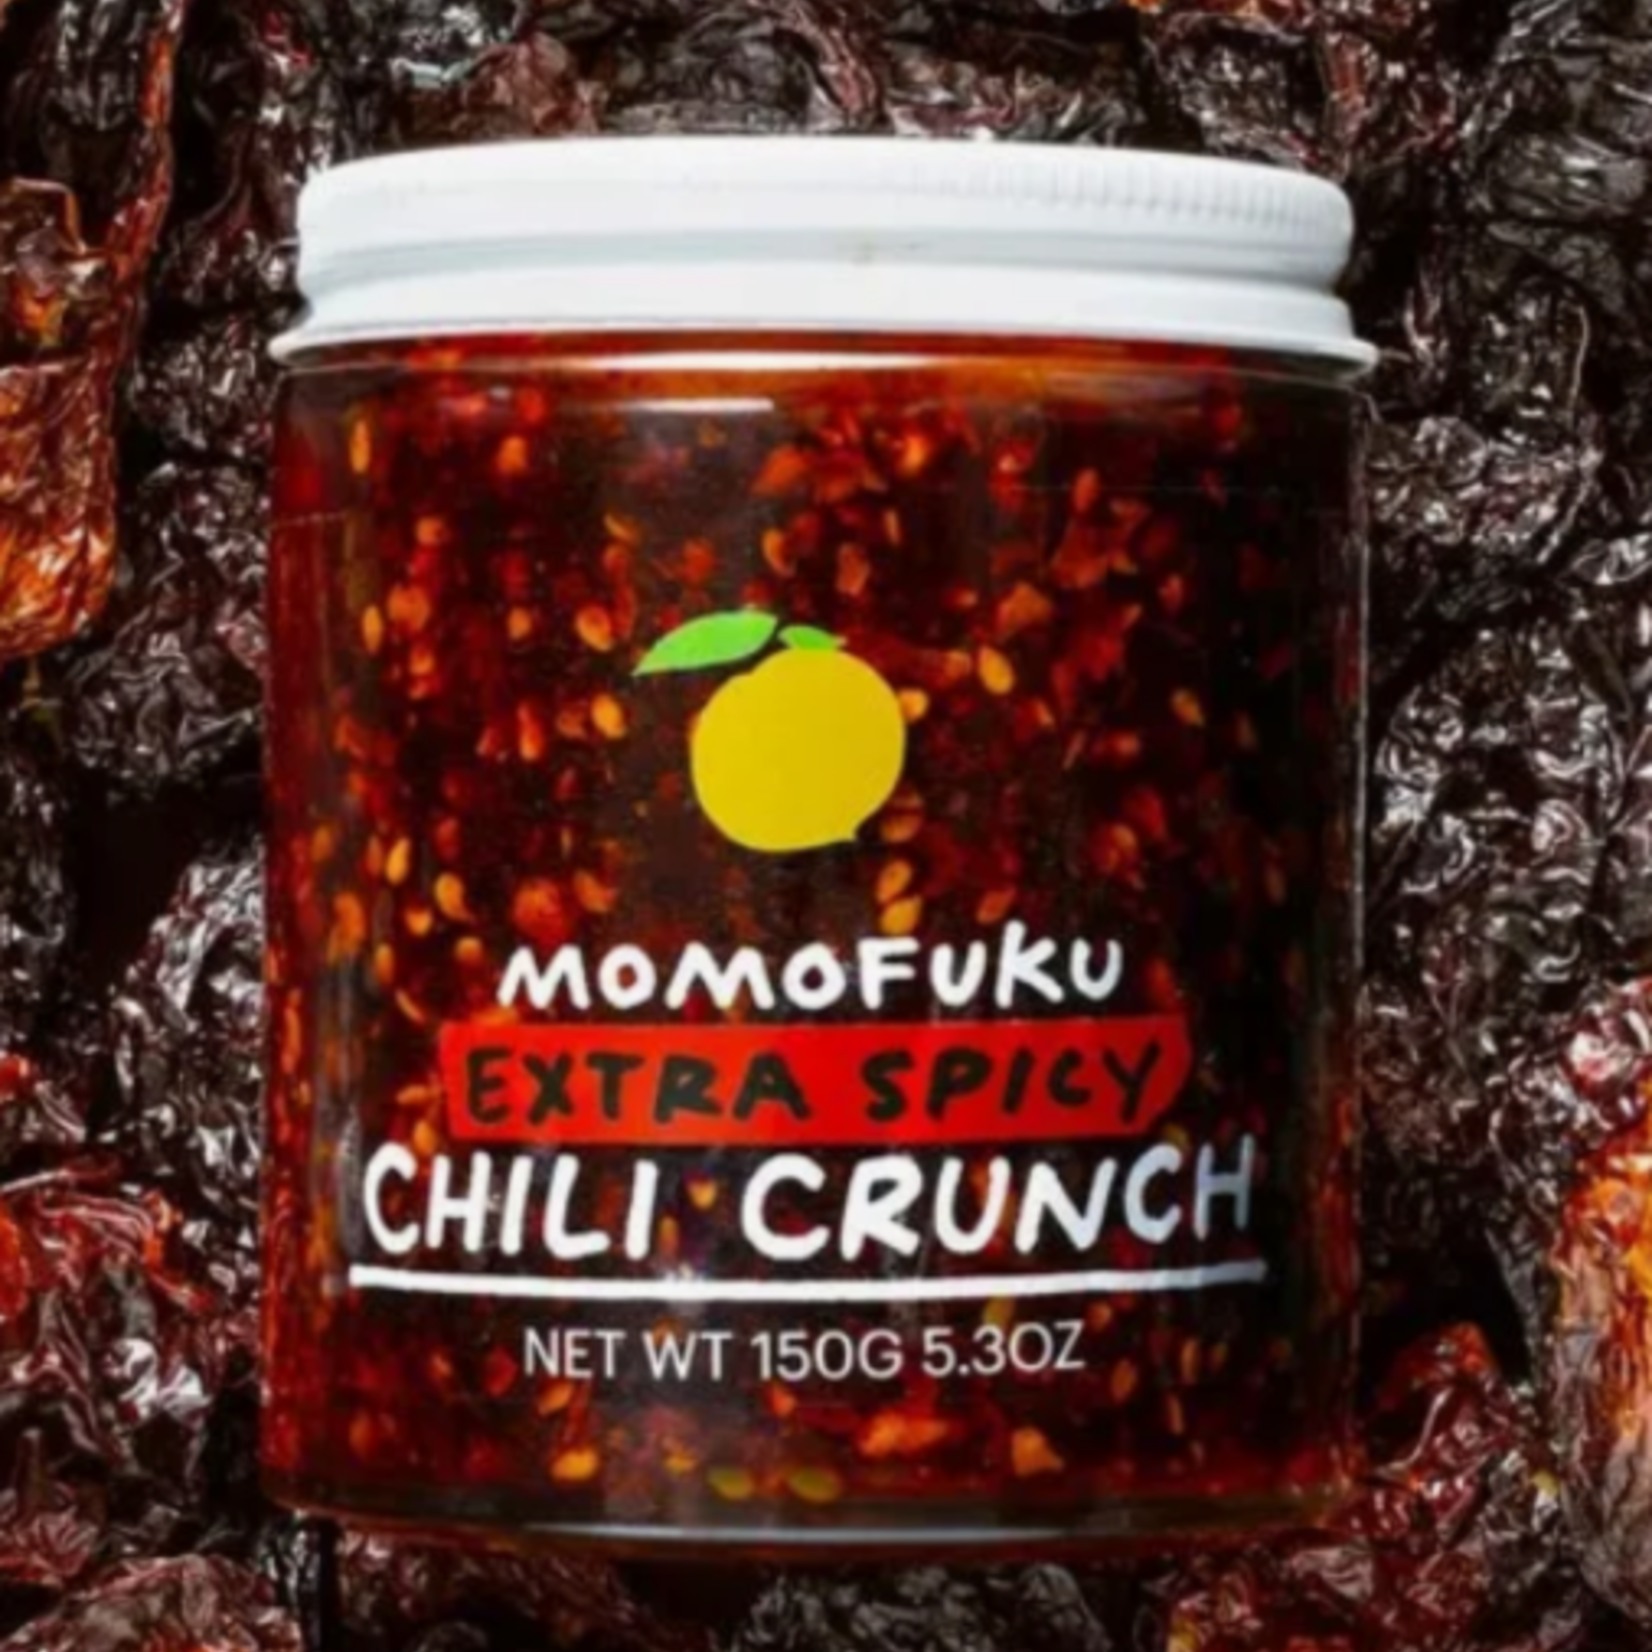 Momofuku Extra Spicy Chili Crunch